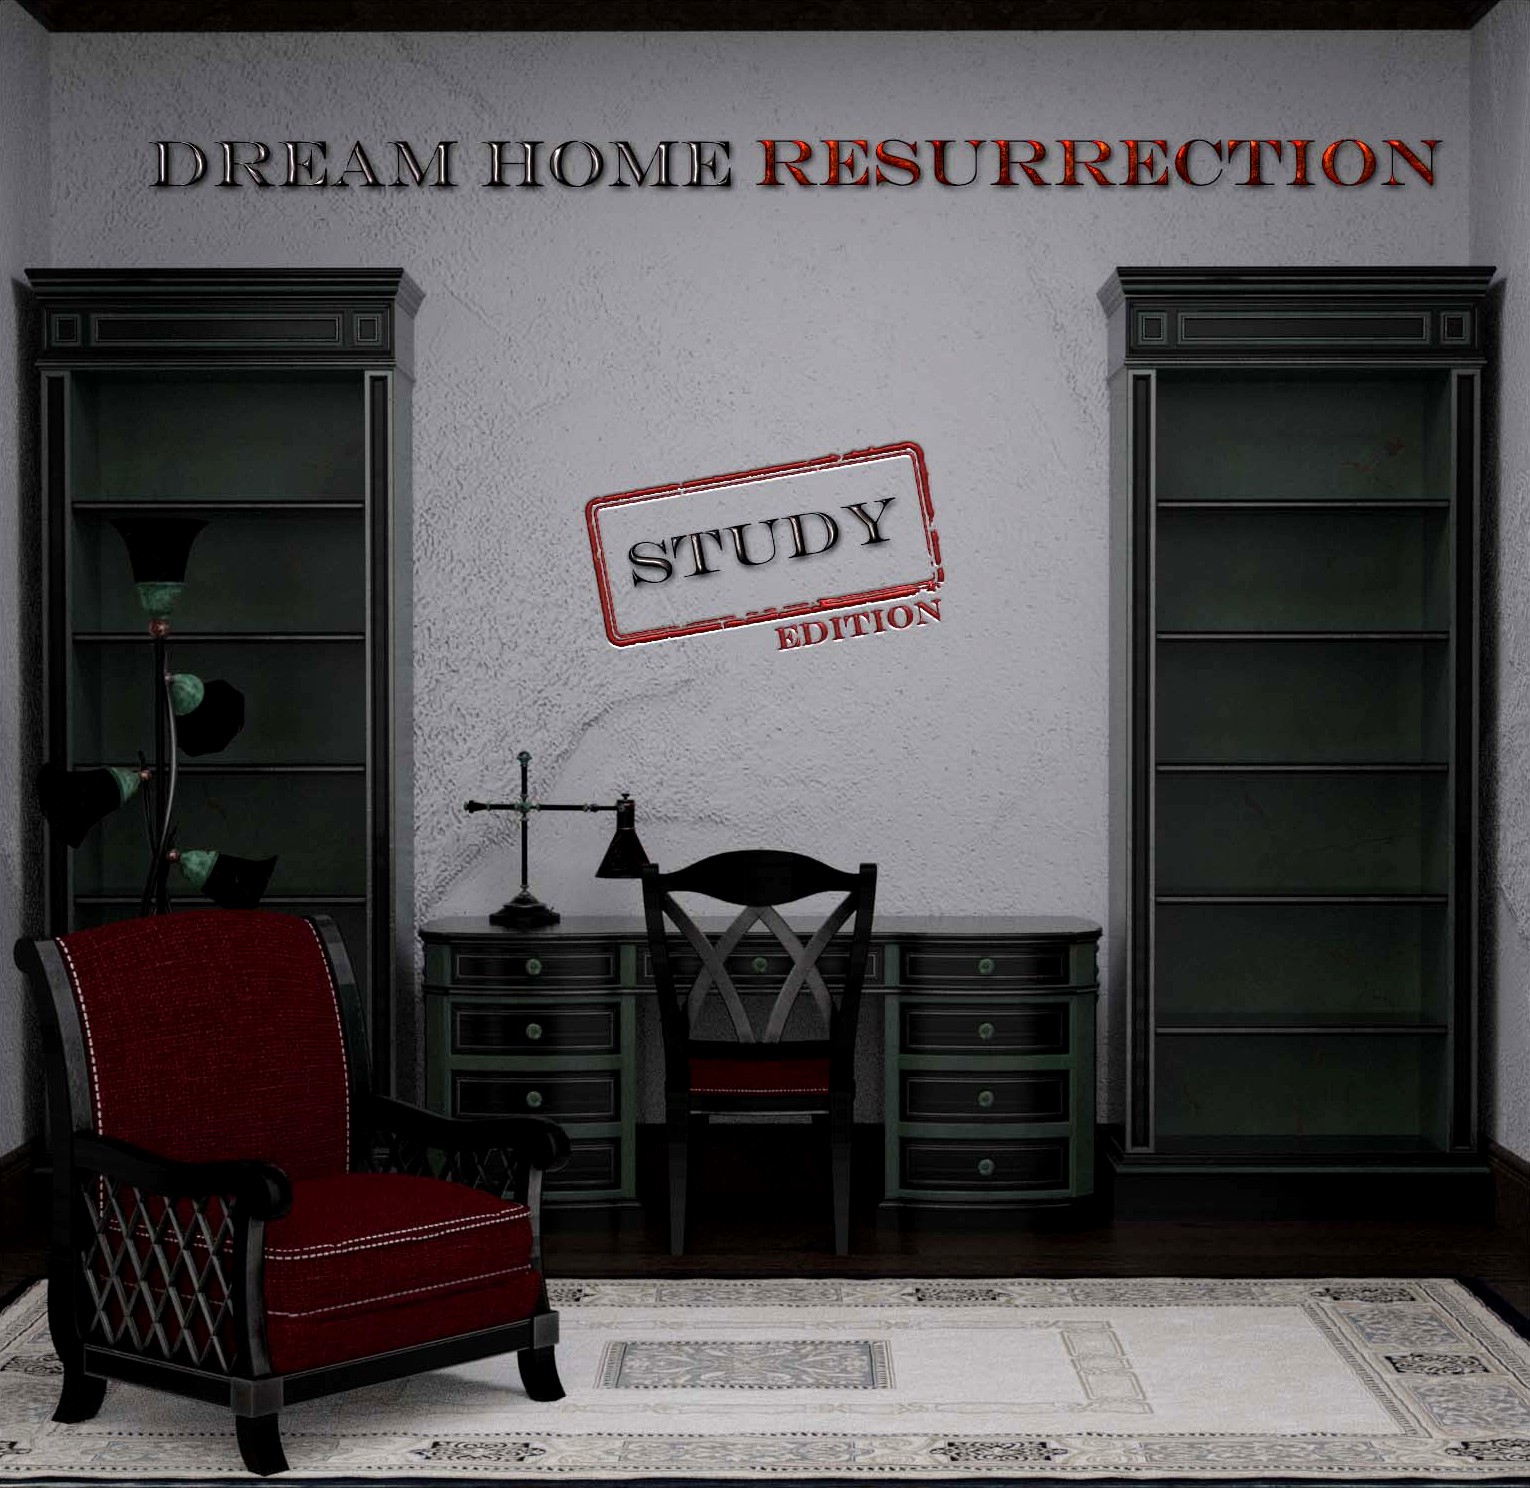 Dream Home Resurrection Study DS Iray